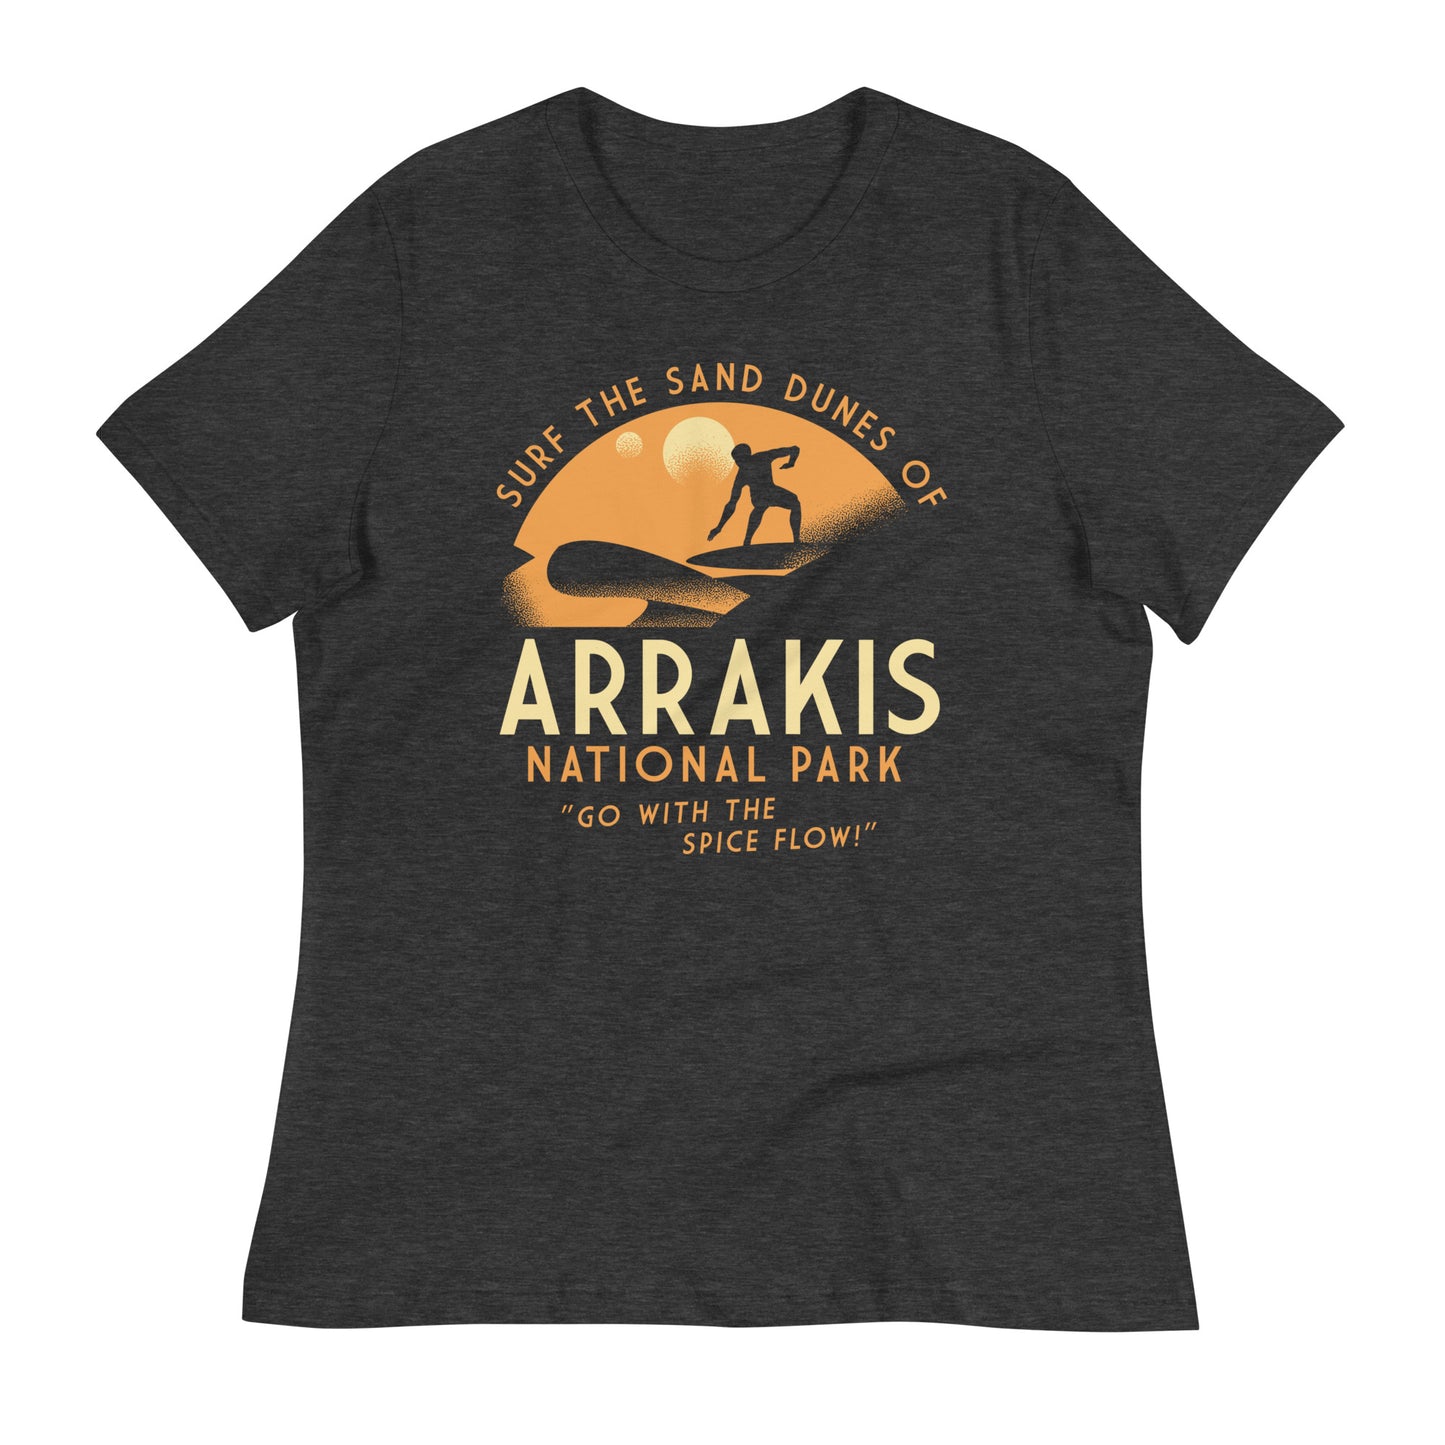 Arrakis National Park Women's Signature Tee